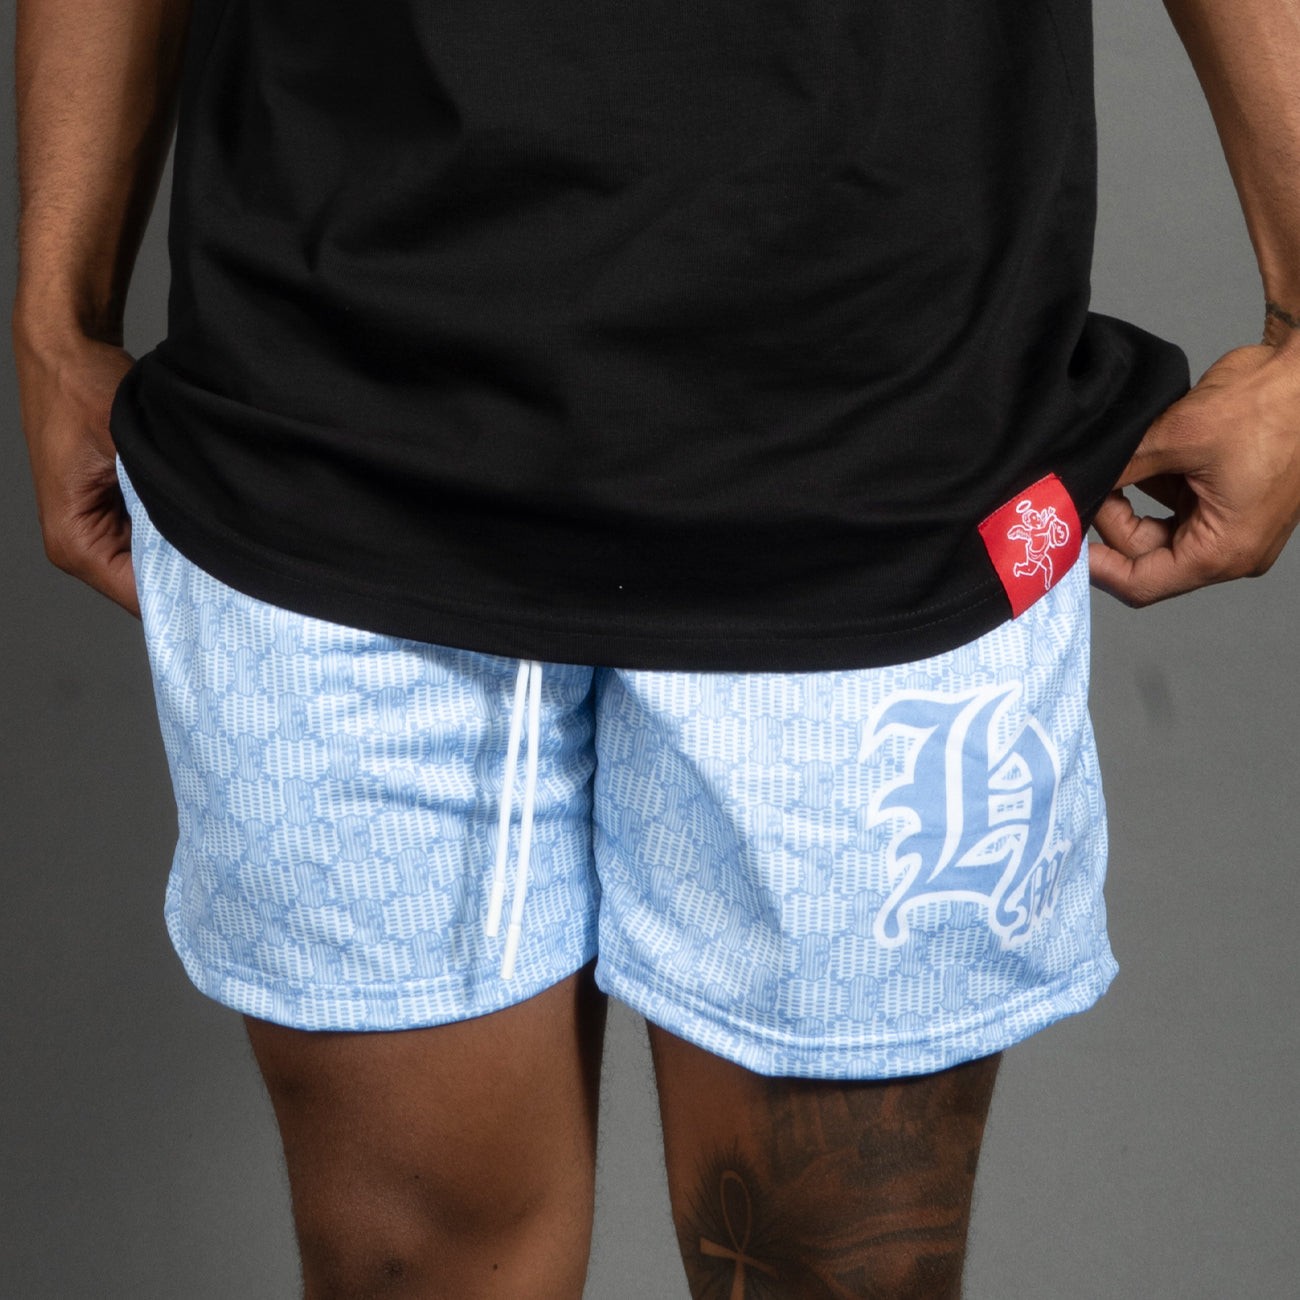 Shorts con estampado HM - Azul claro